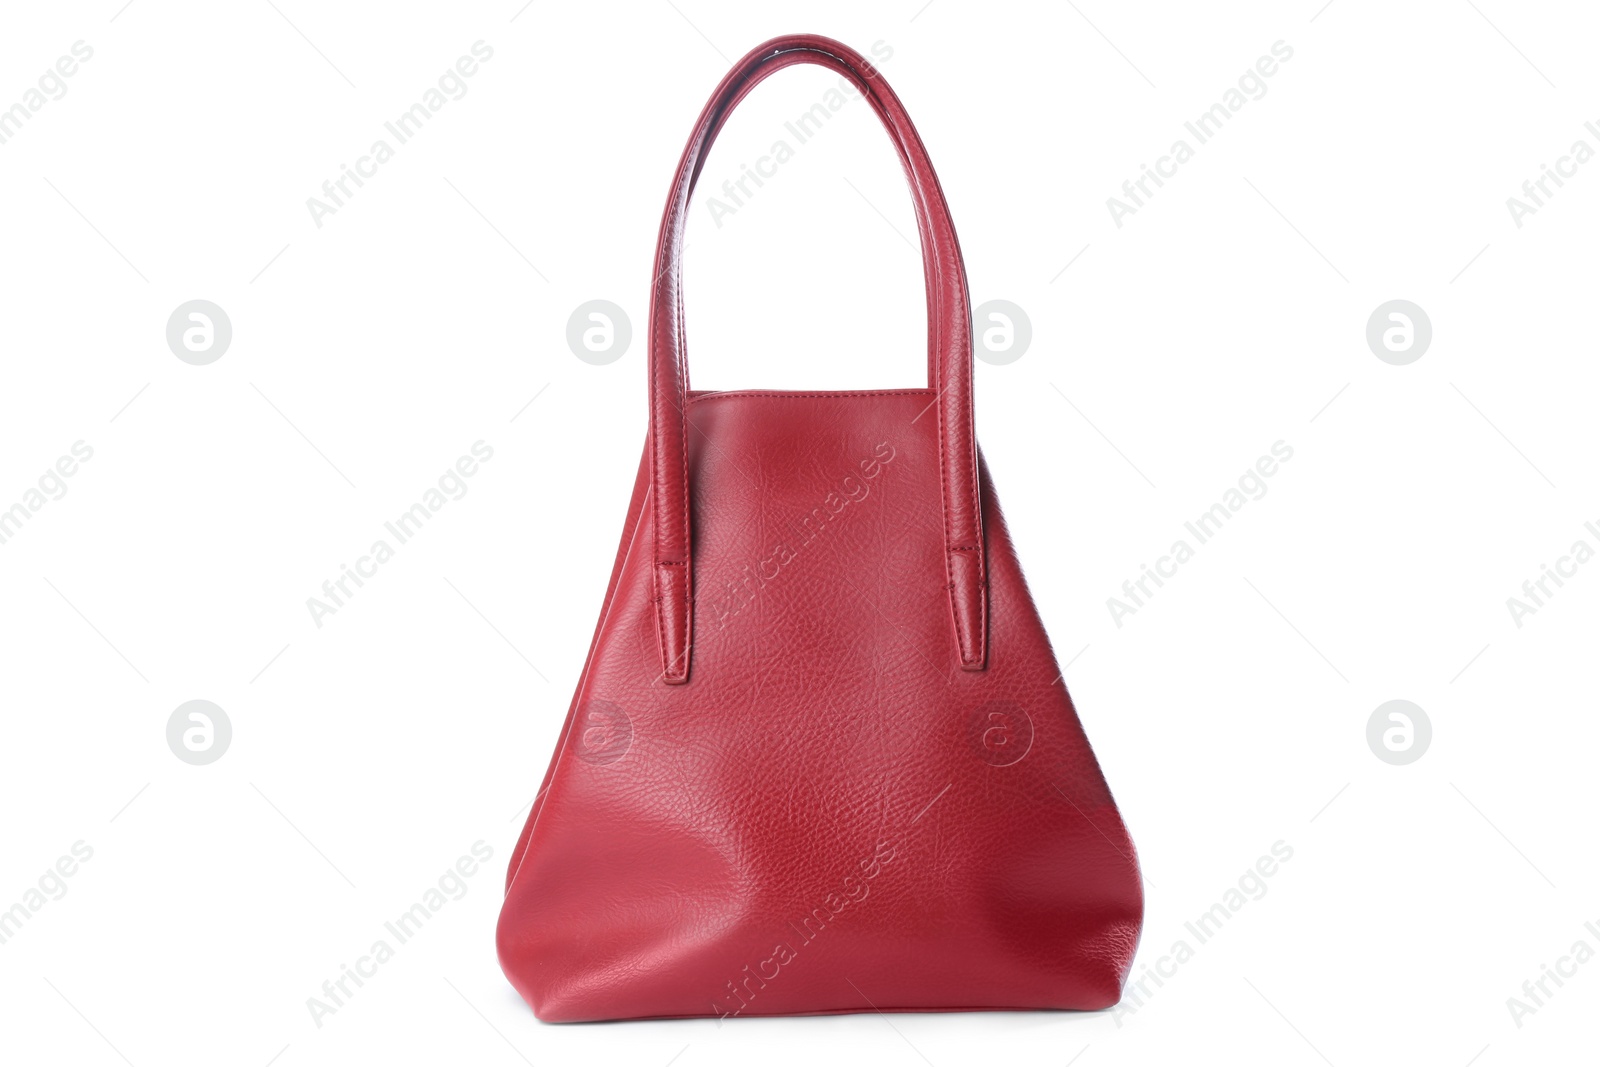 Photo of Stylish red leather bag isolated on white